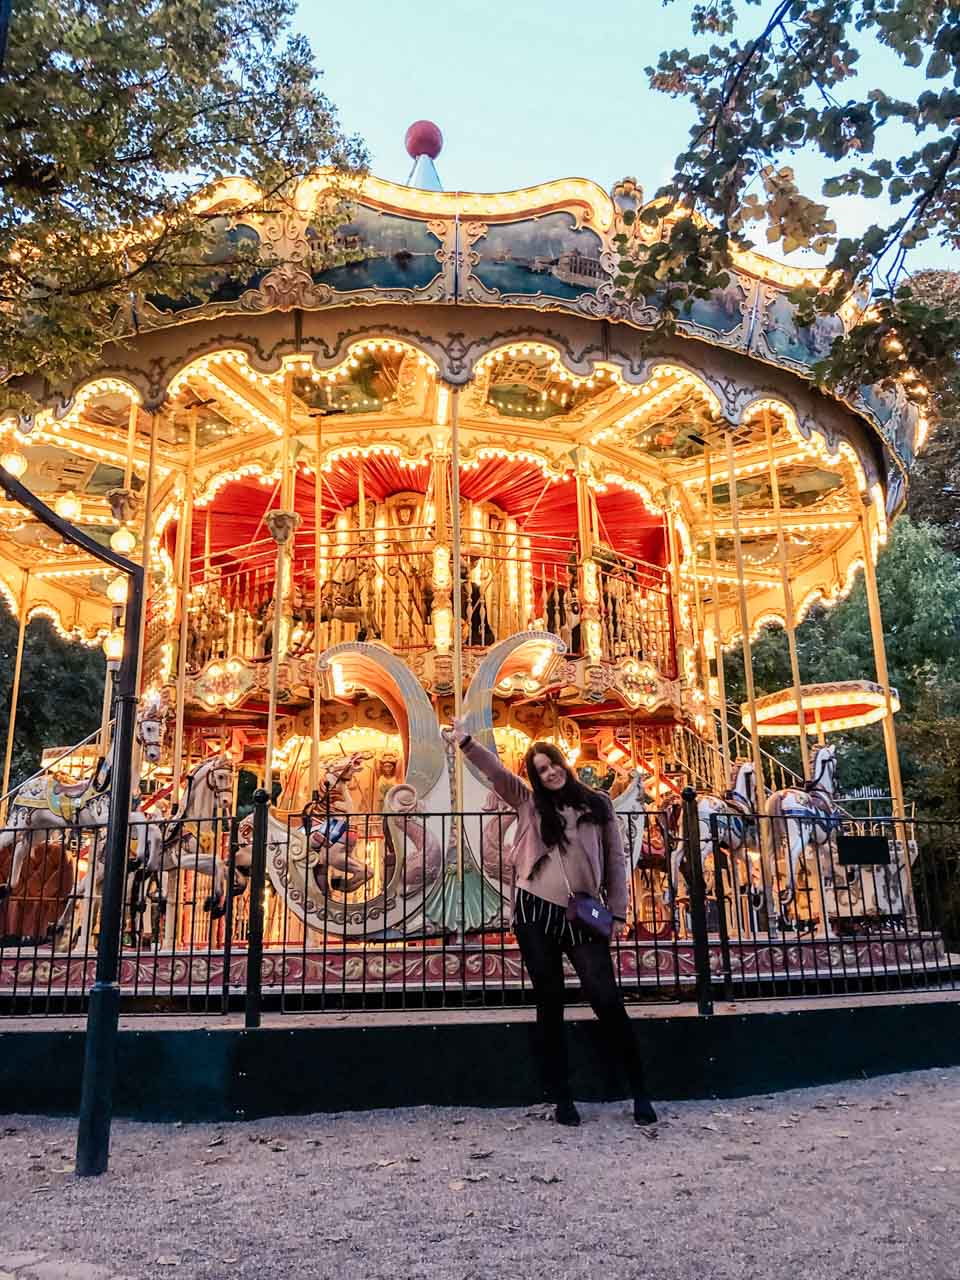 A girl posing in front of a carousel in Tivoli Gardens in Copenhagen, Denmark